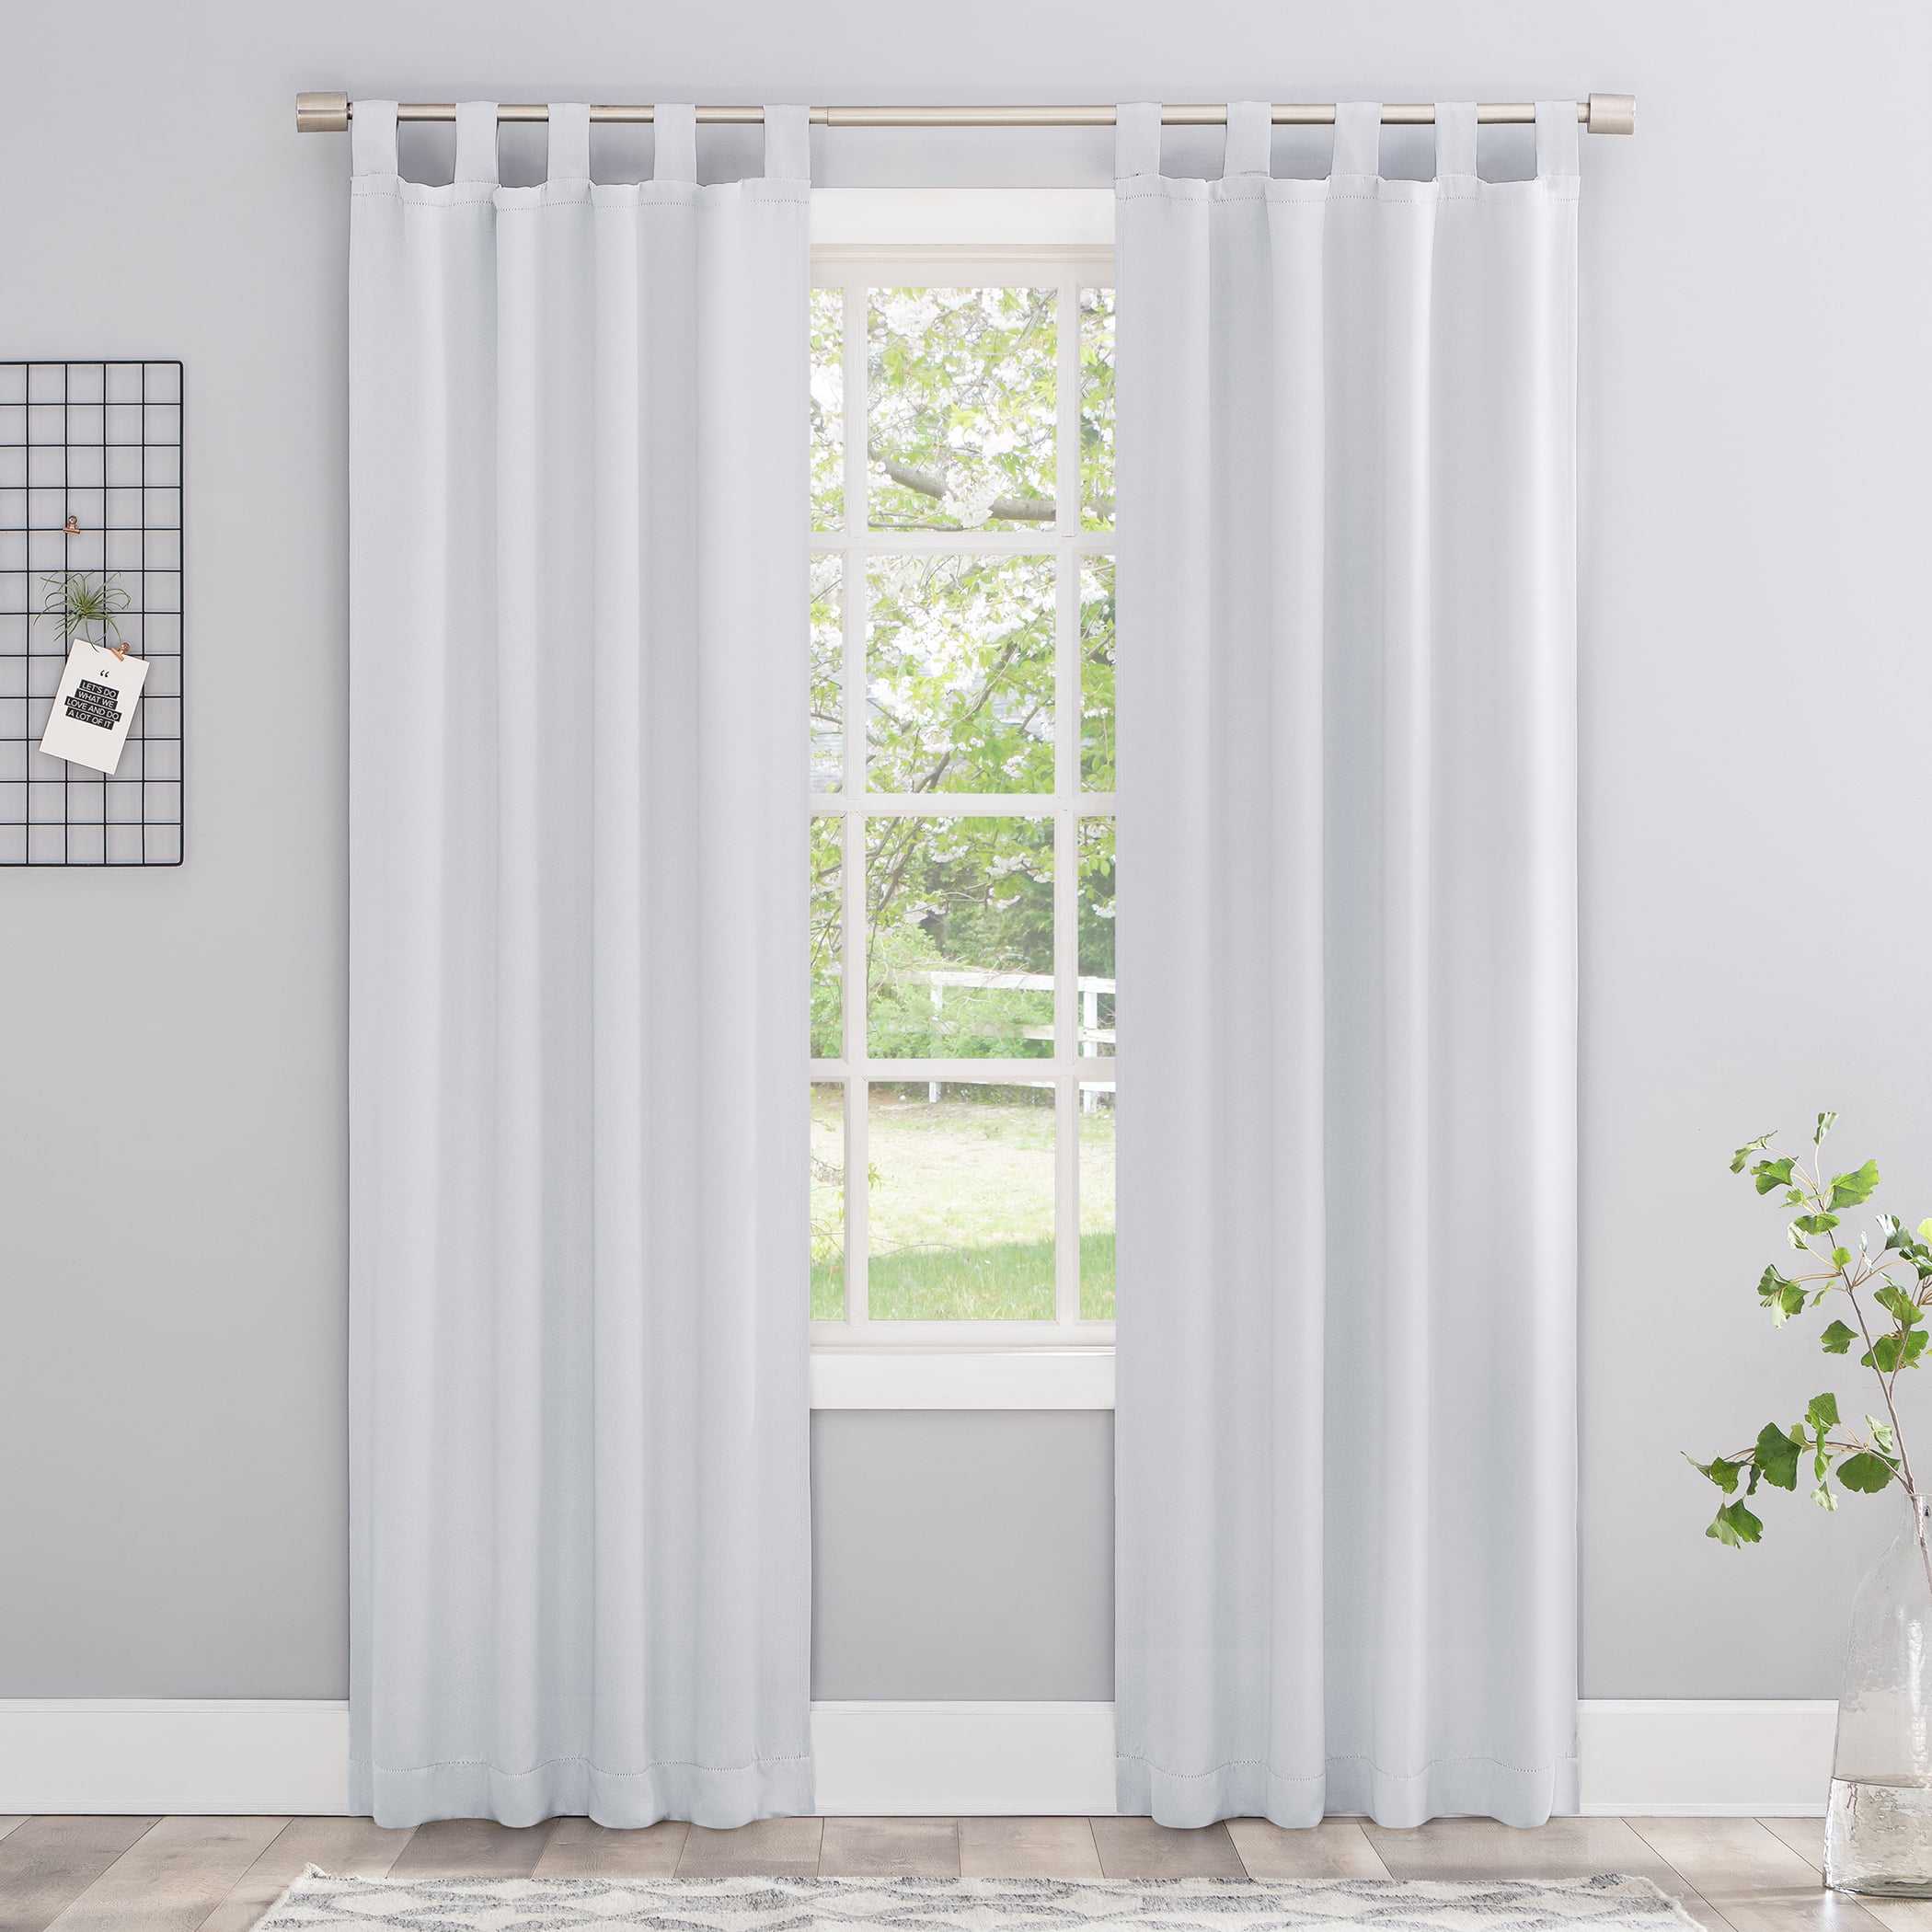 Shatex Indoor/Outdoor Single Window Curtain Panel Drape Tab Top Wheat 50x84inch 